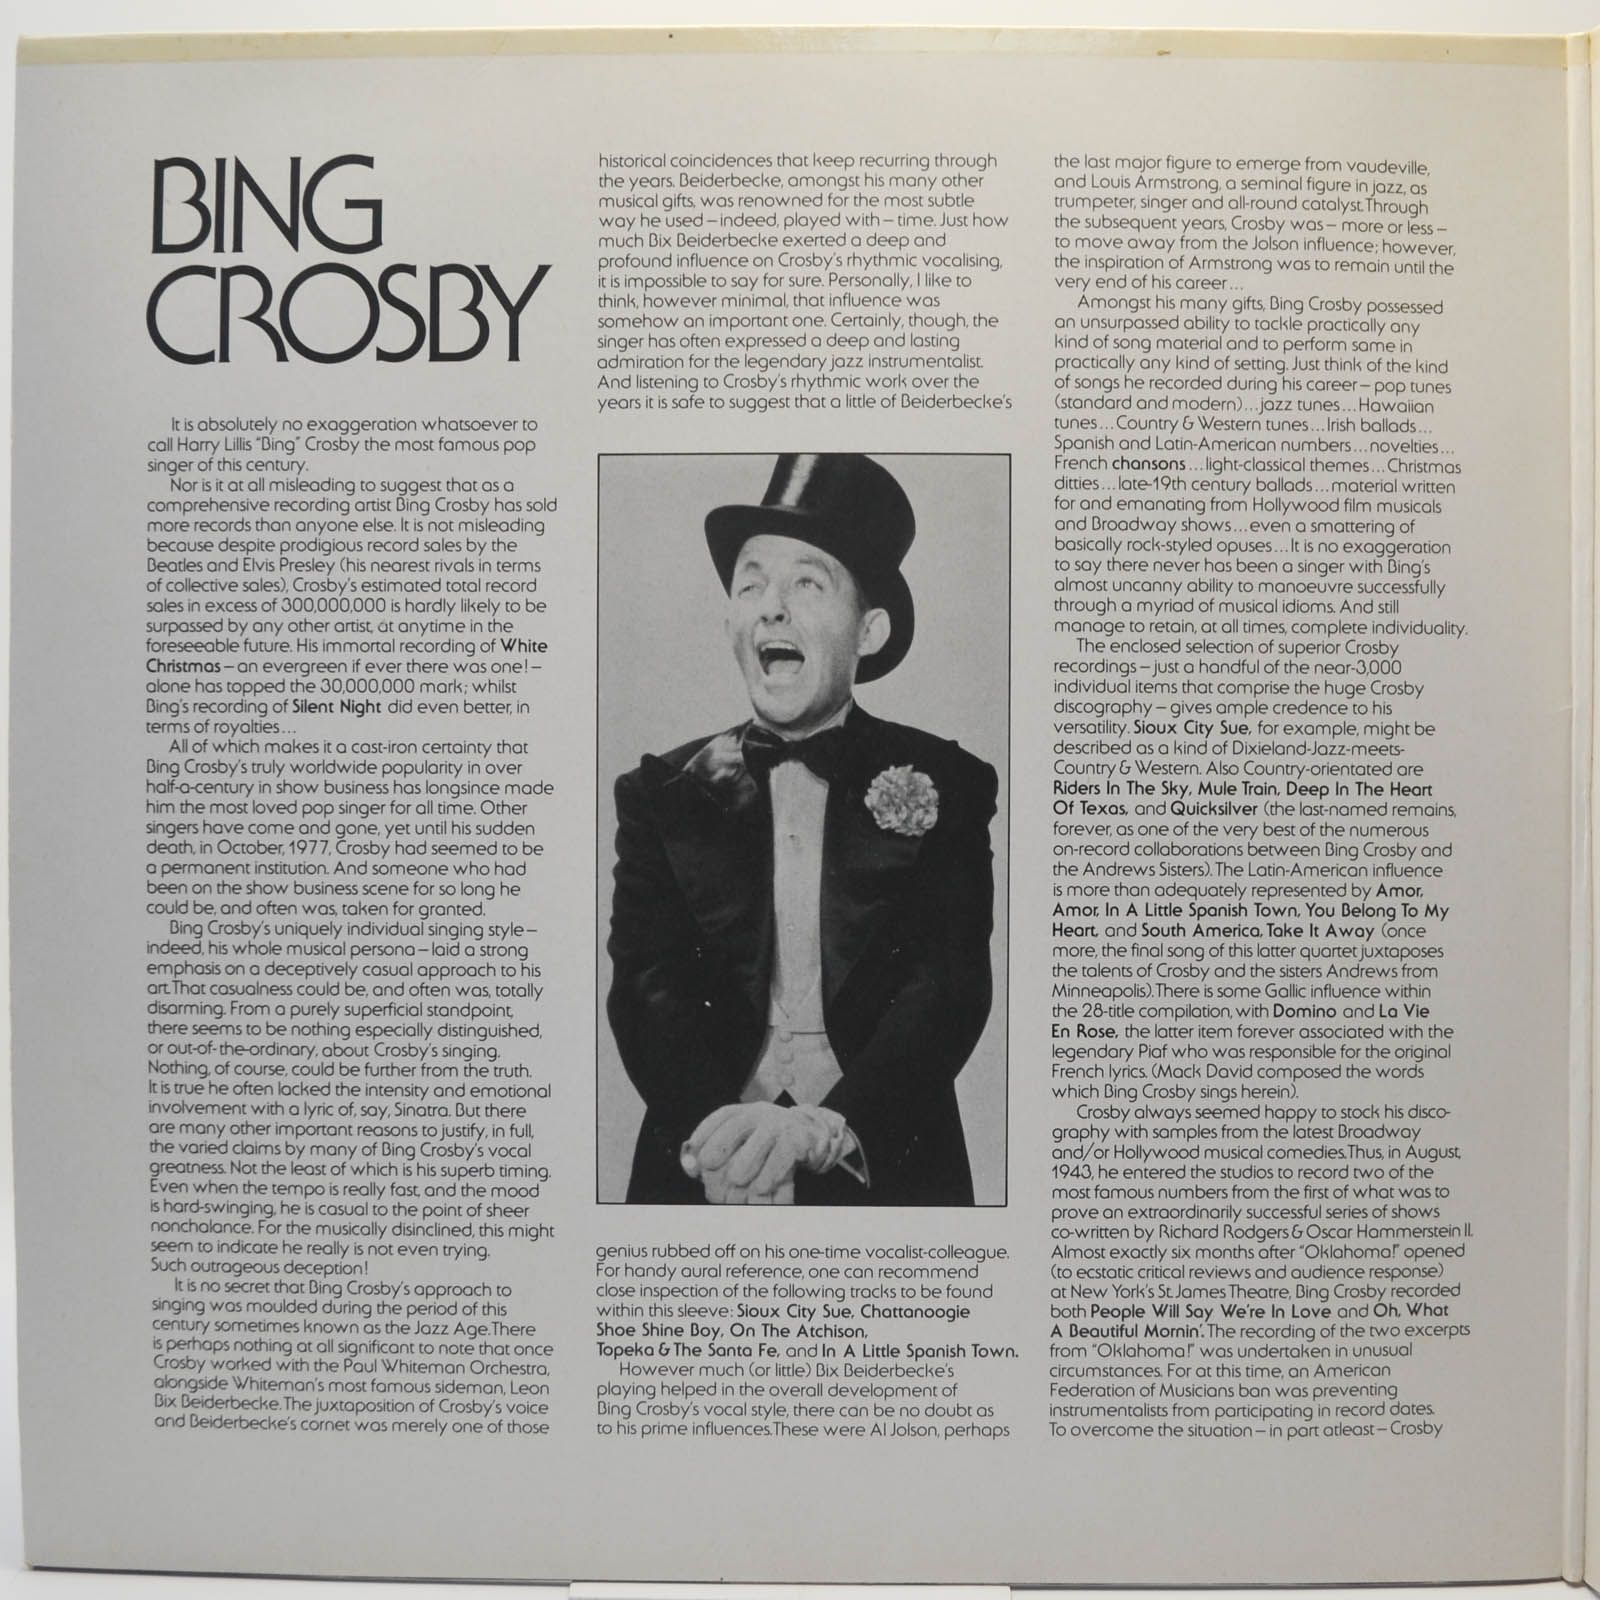 Bing Crosby — Star Gold (2LP), 1975